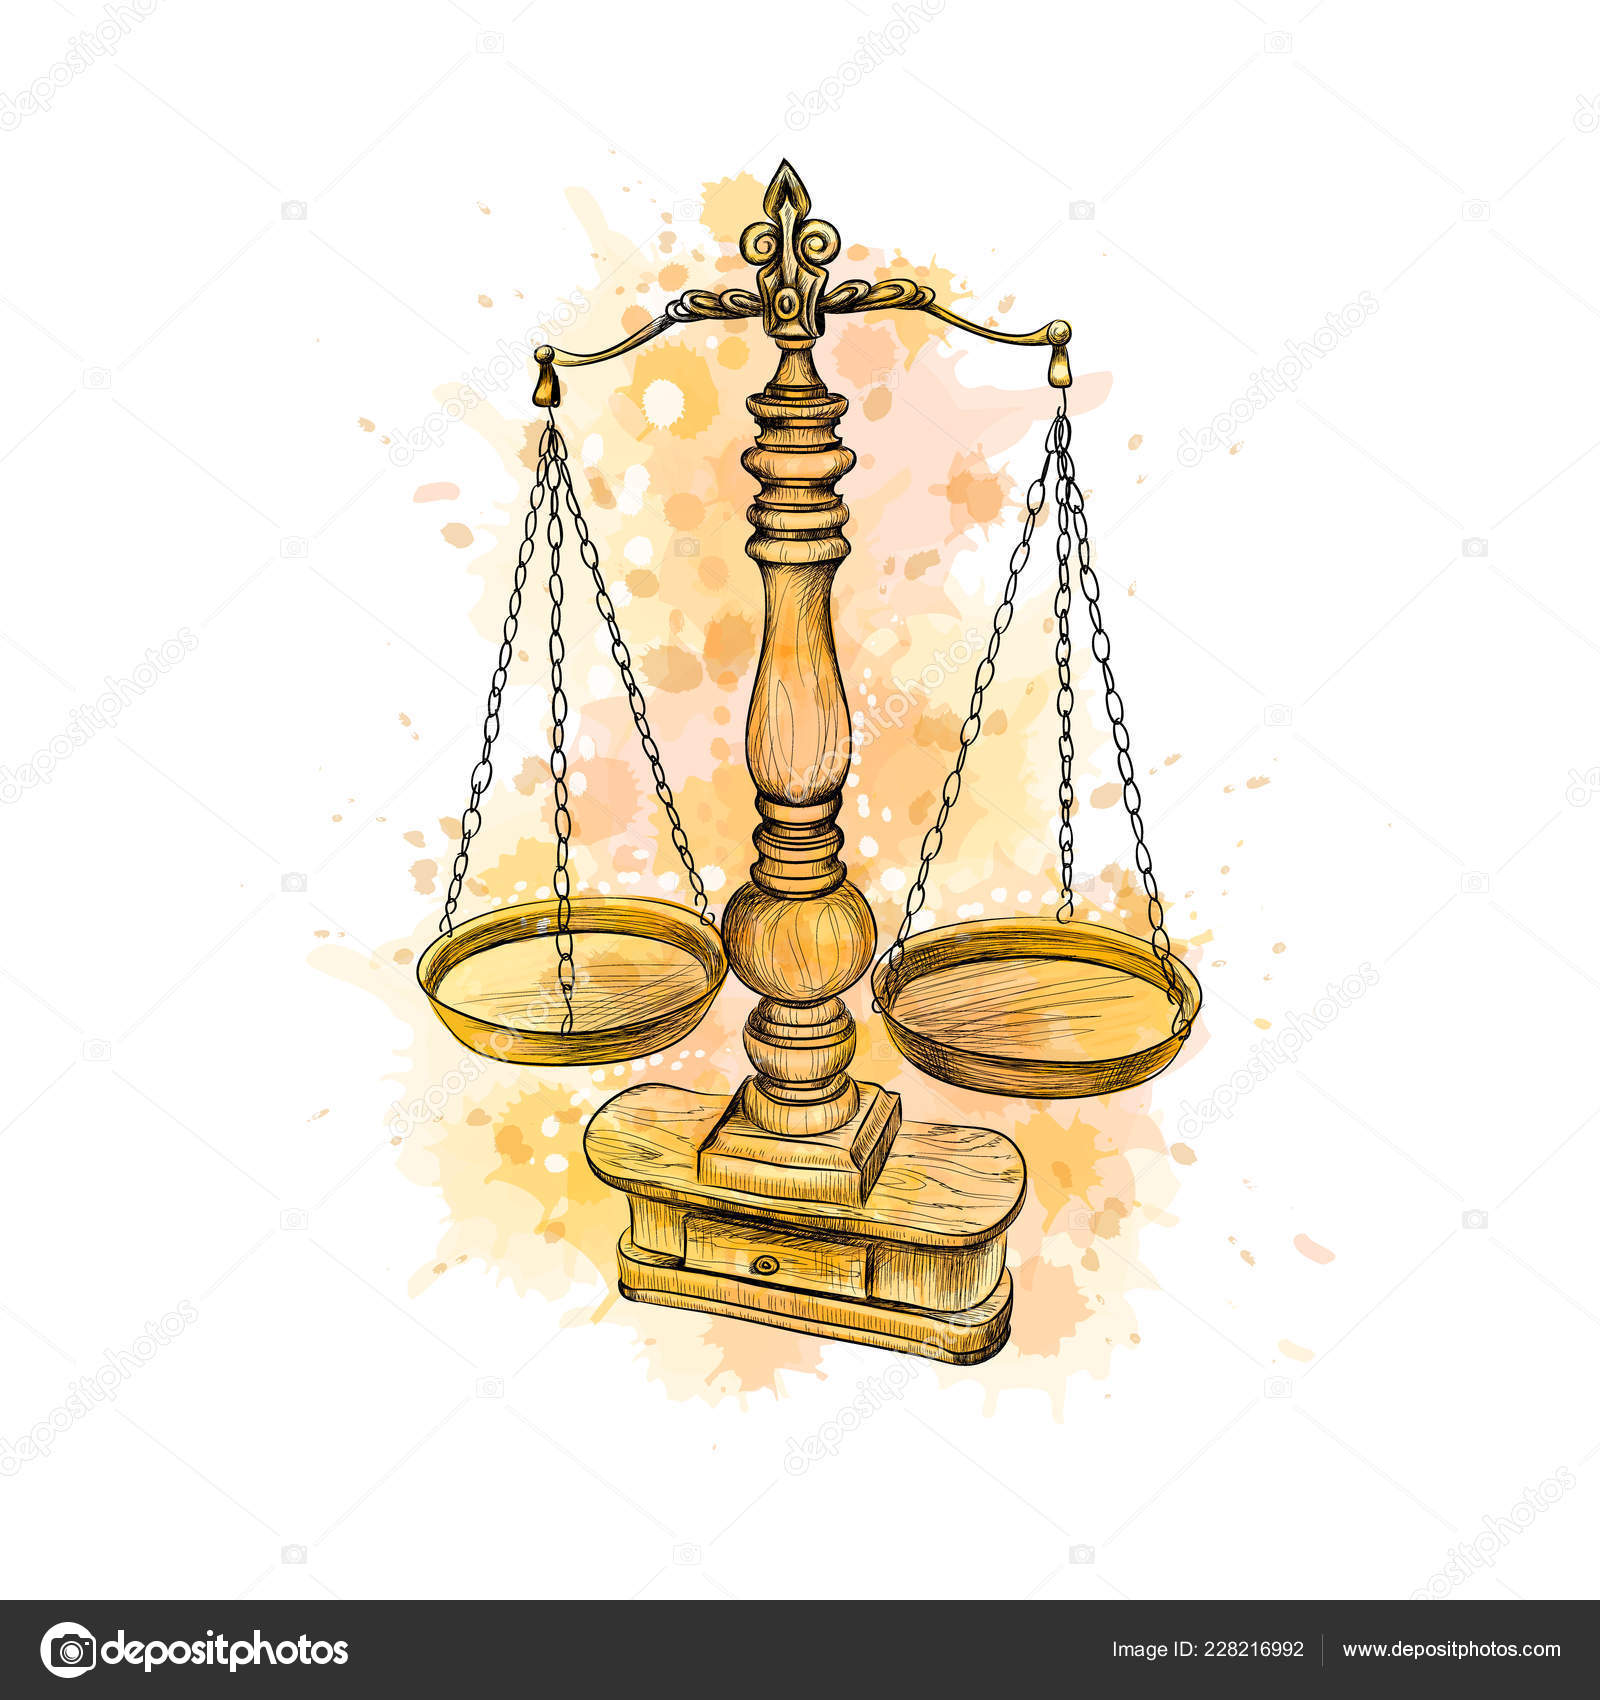 https://st4.depositphotos.com/5740452/22821/v/1600/depositphotos_228216992-stock-illustration-vintage-old-scale-law-scales.jpg